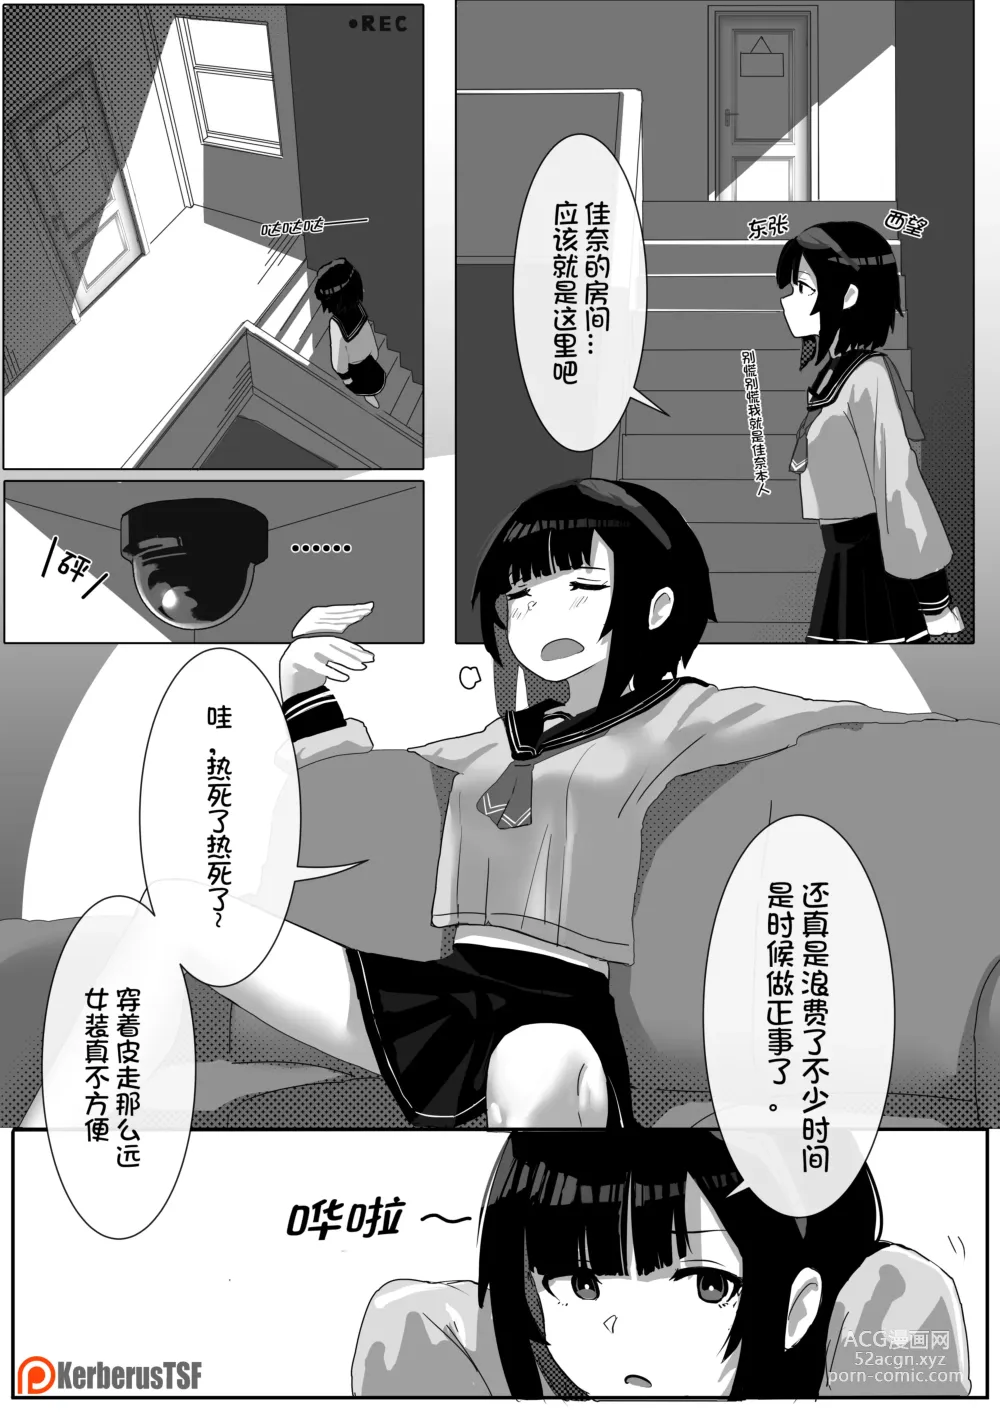 Page 2 of manga 皮物問題學生 #1 渡邊佳奈、2